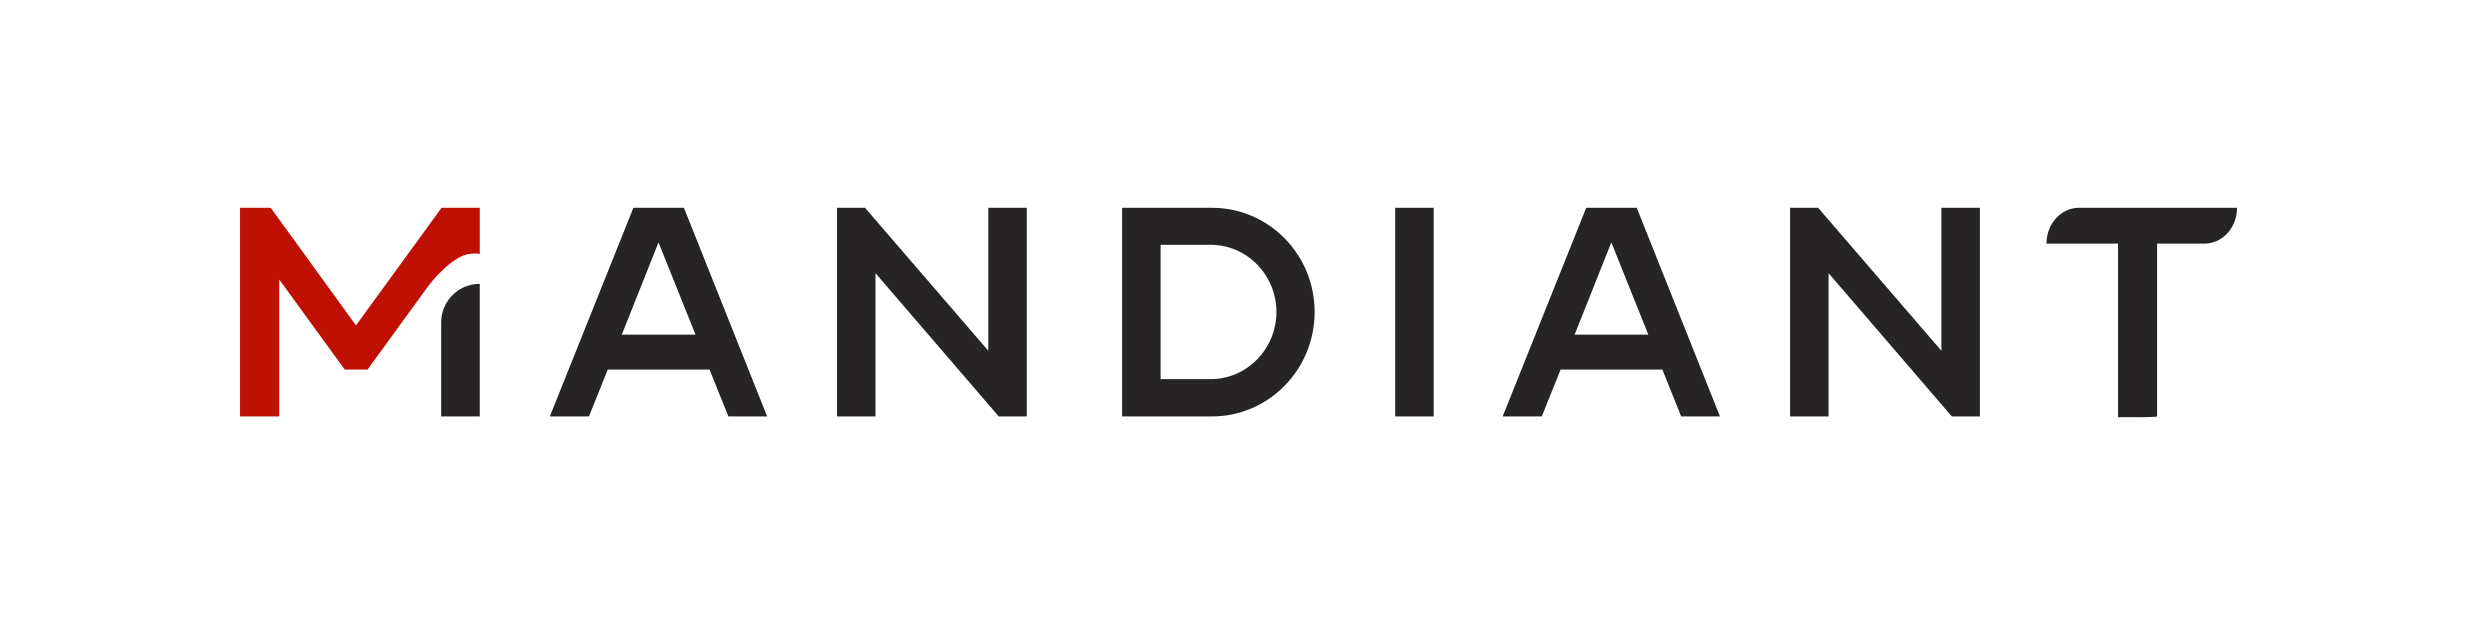 Mandiant Company Logo